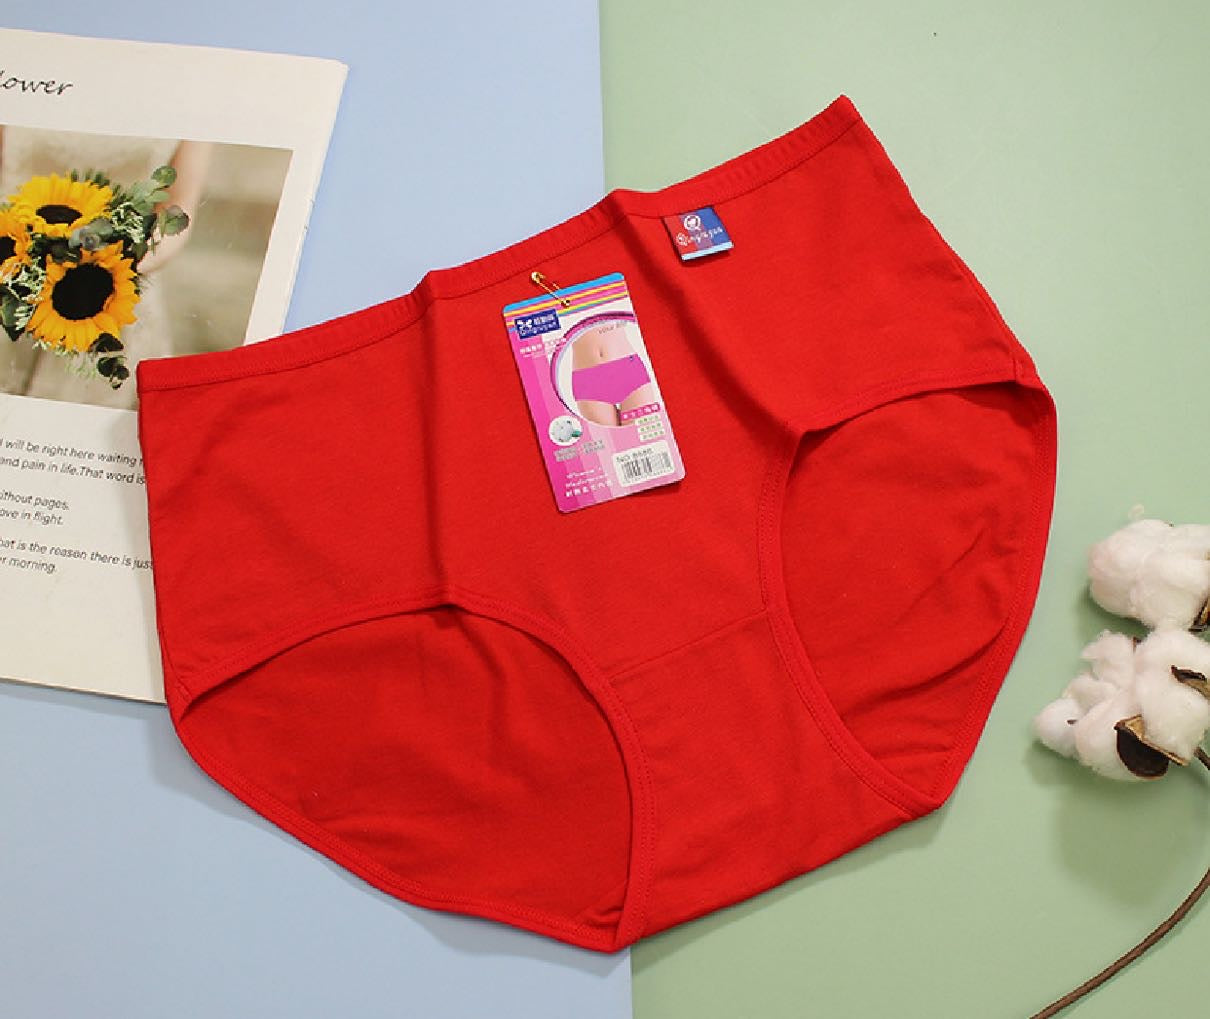 Women's Mid-Waist Wholesale Women's Briefs Foreign Trade Panties